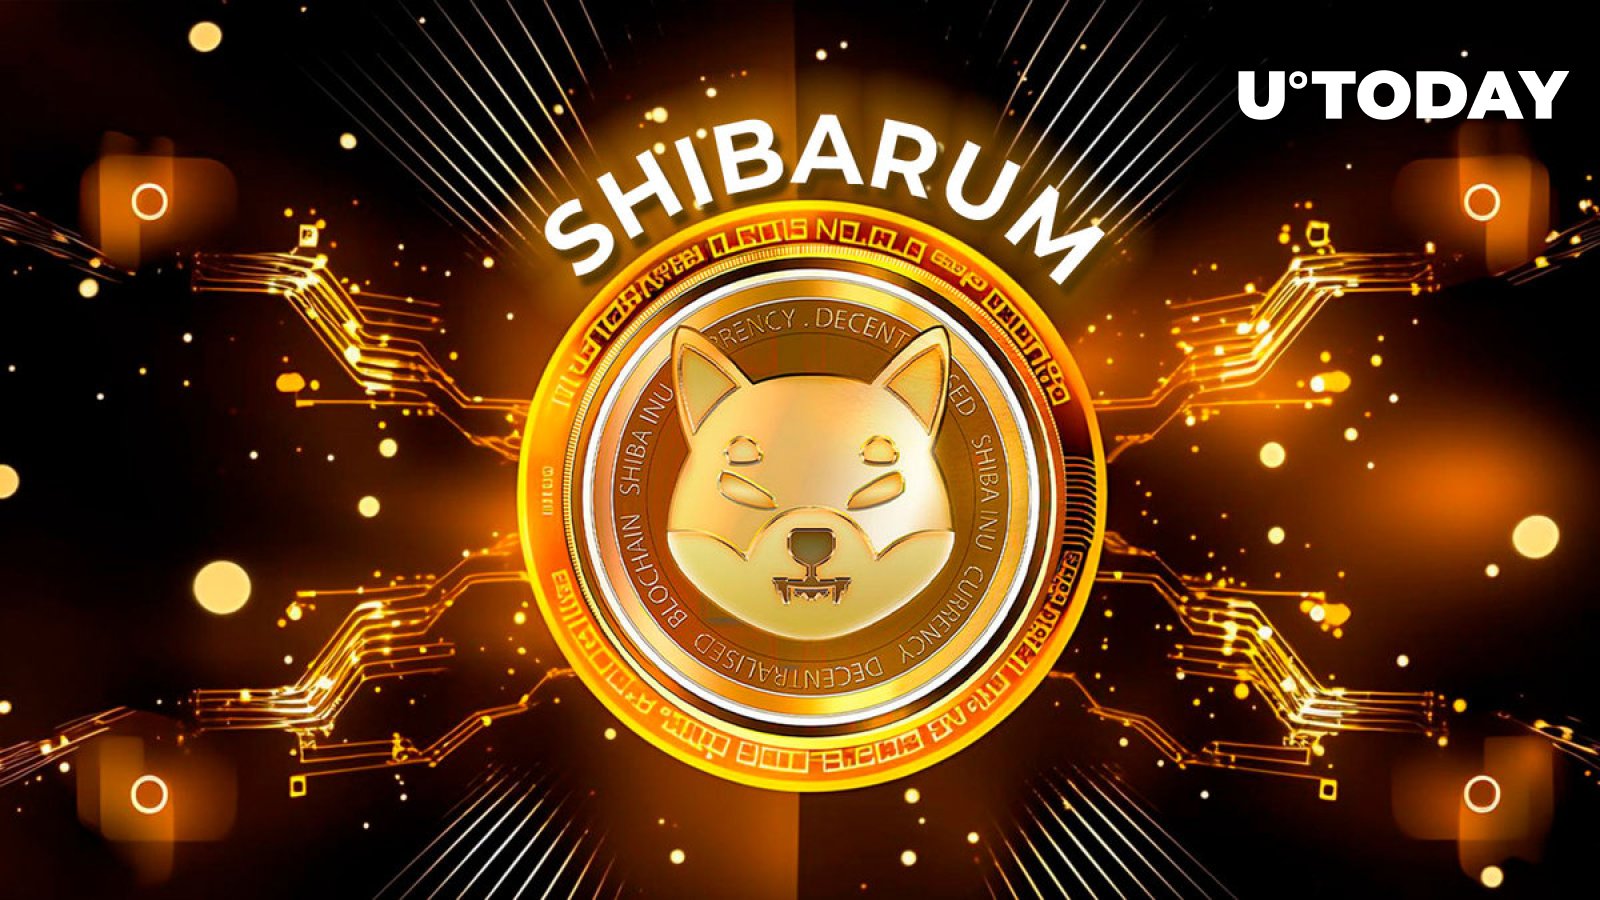 Major Shibarium Partner and SHIB Burner Revealed by Shiba Inu Member